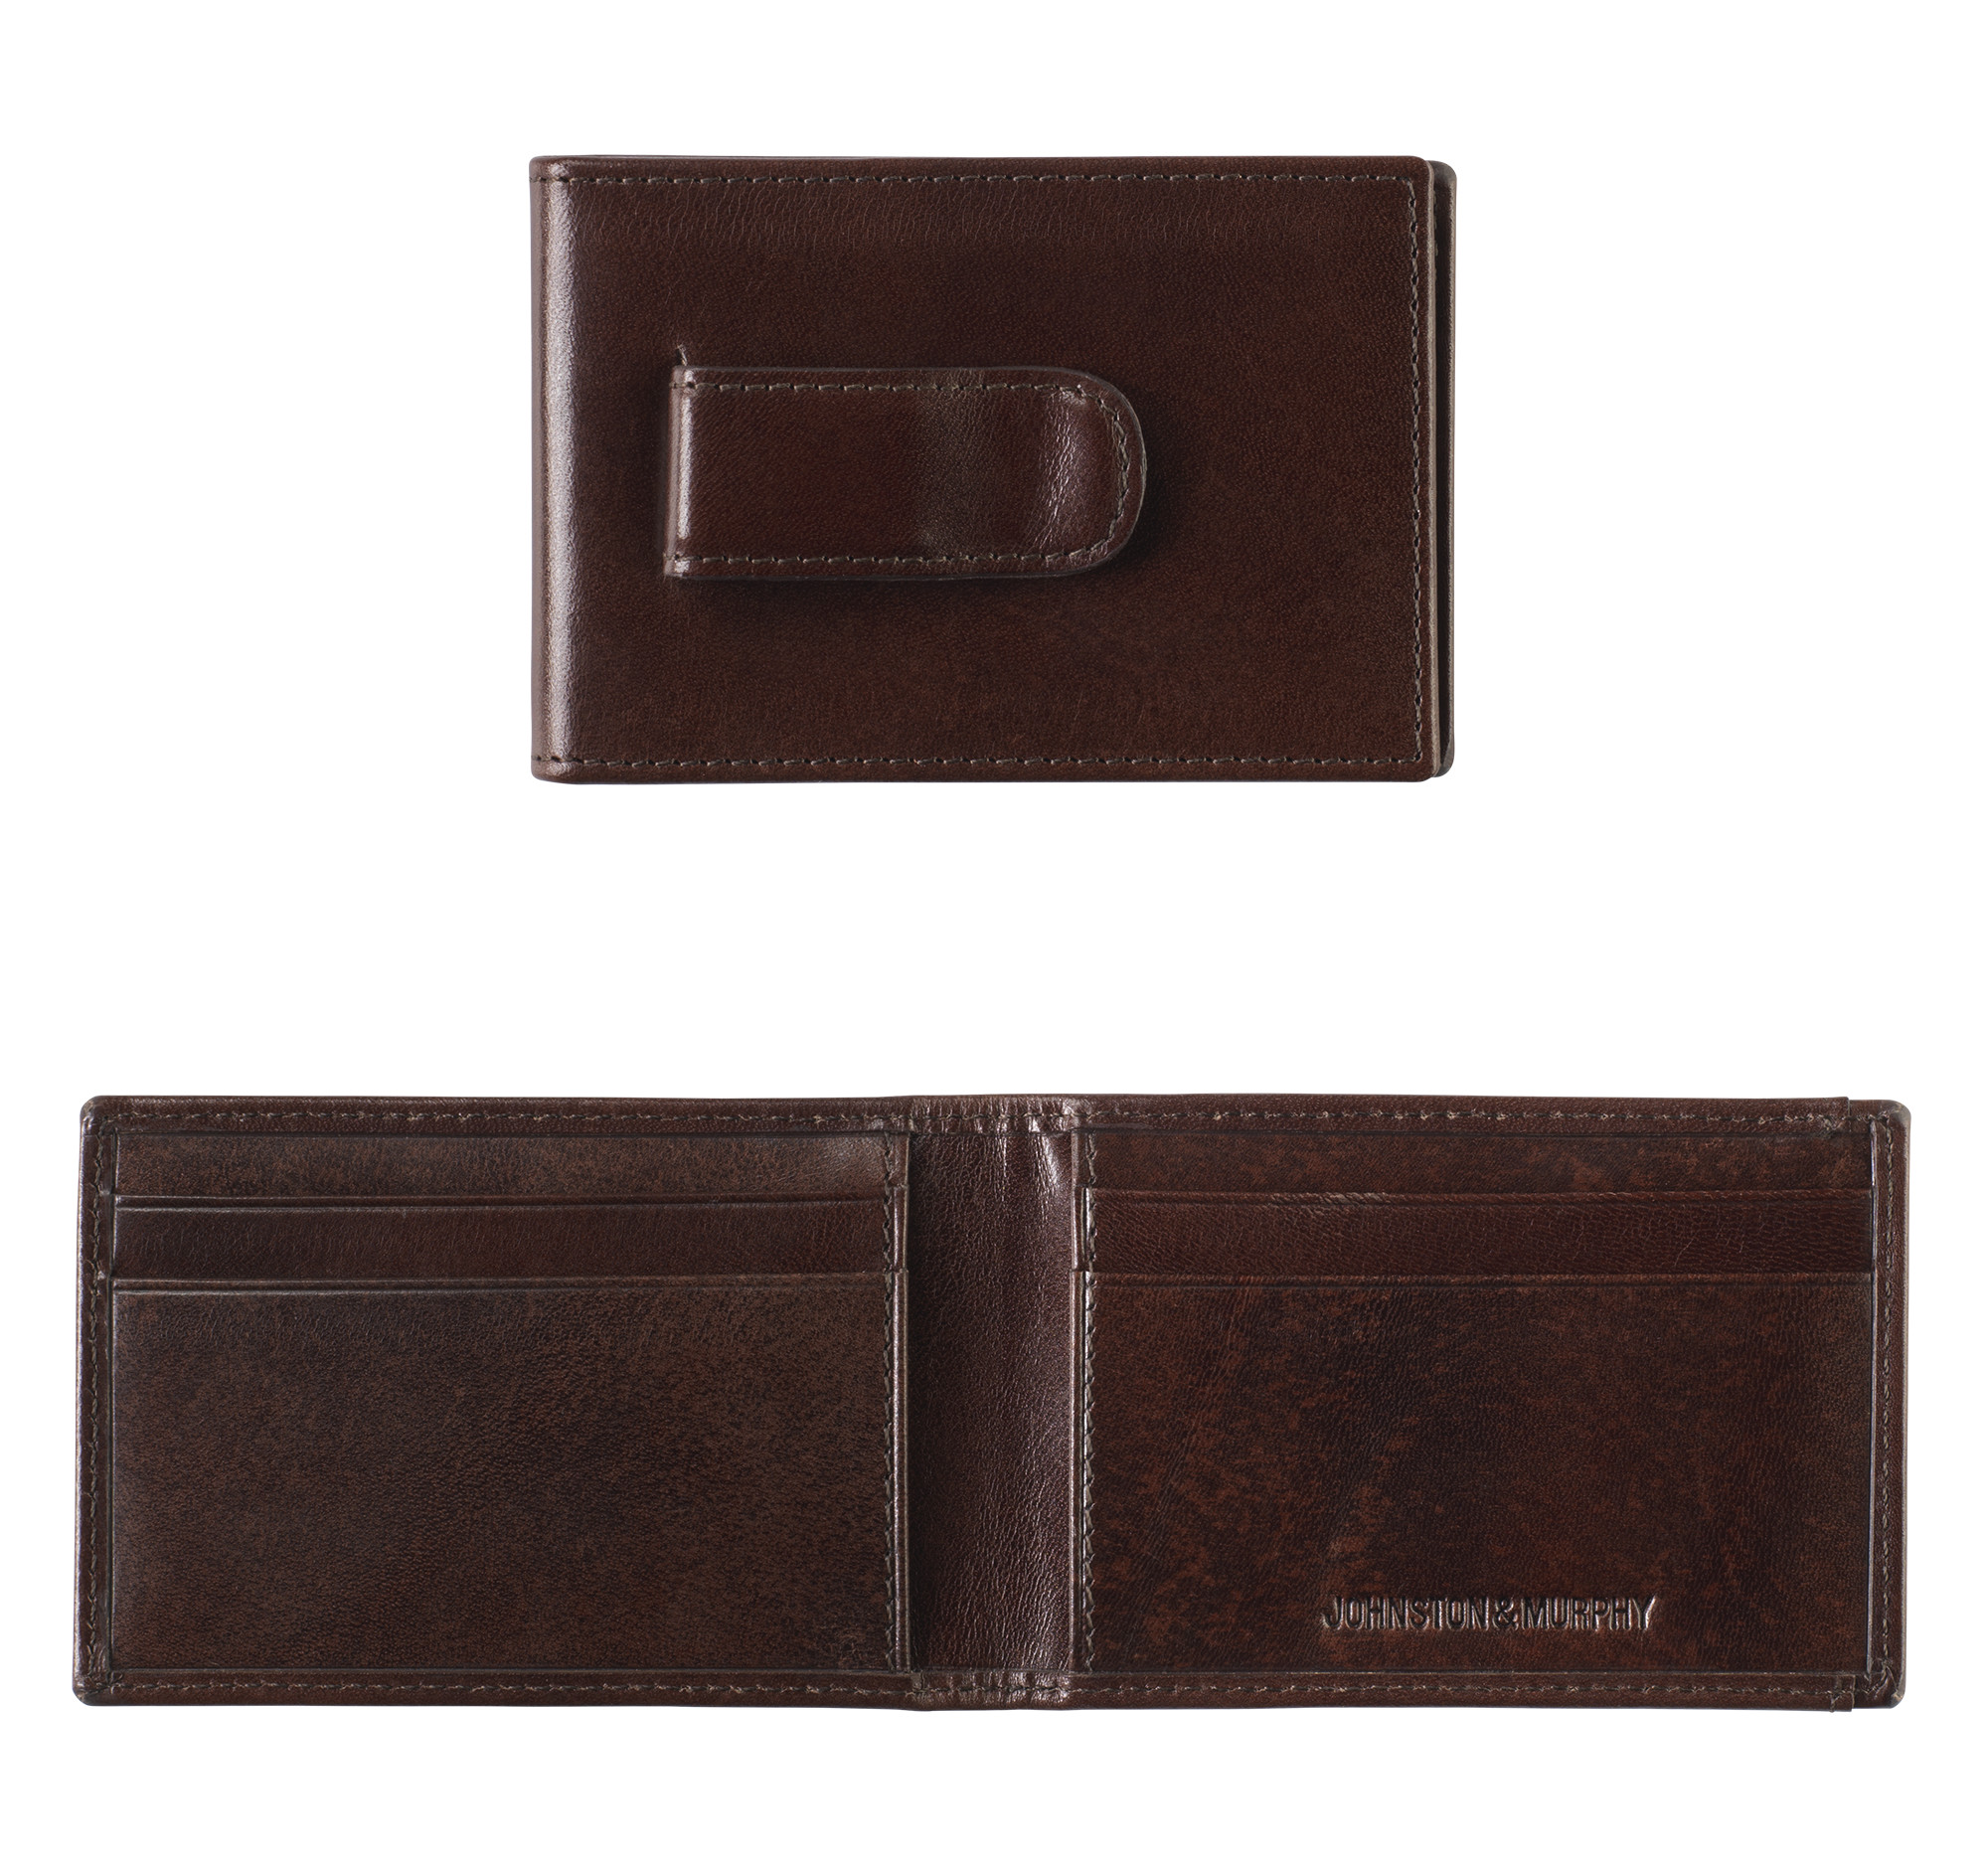 Johnston & Murphy Italian Leather Two-Fold Money Clip Wallet